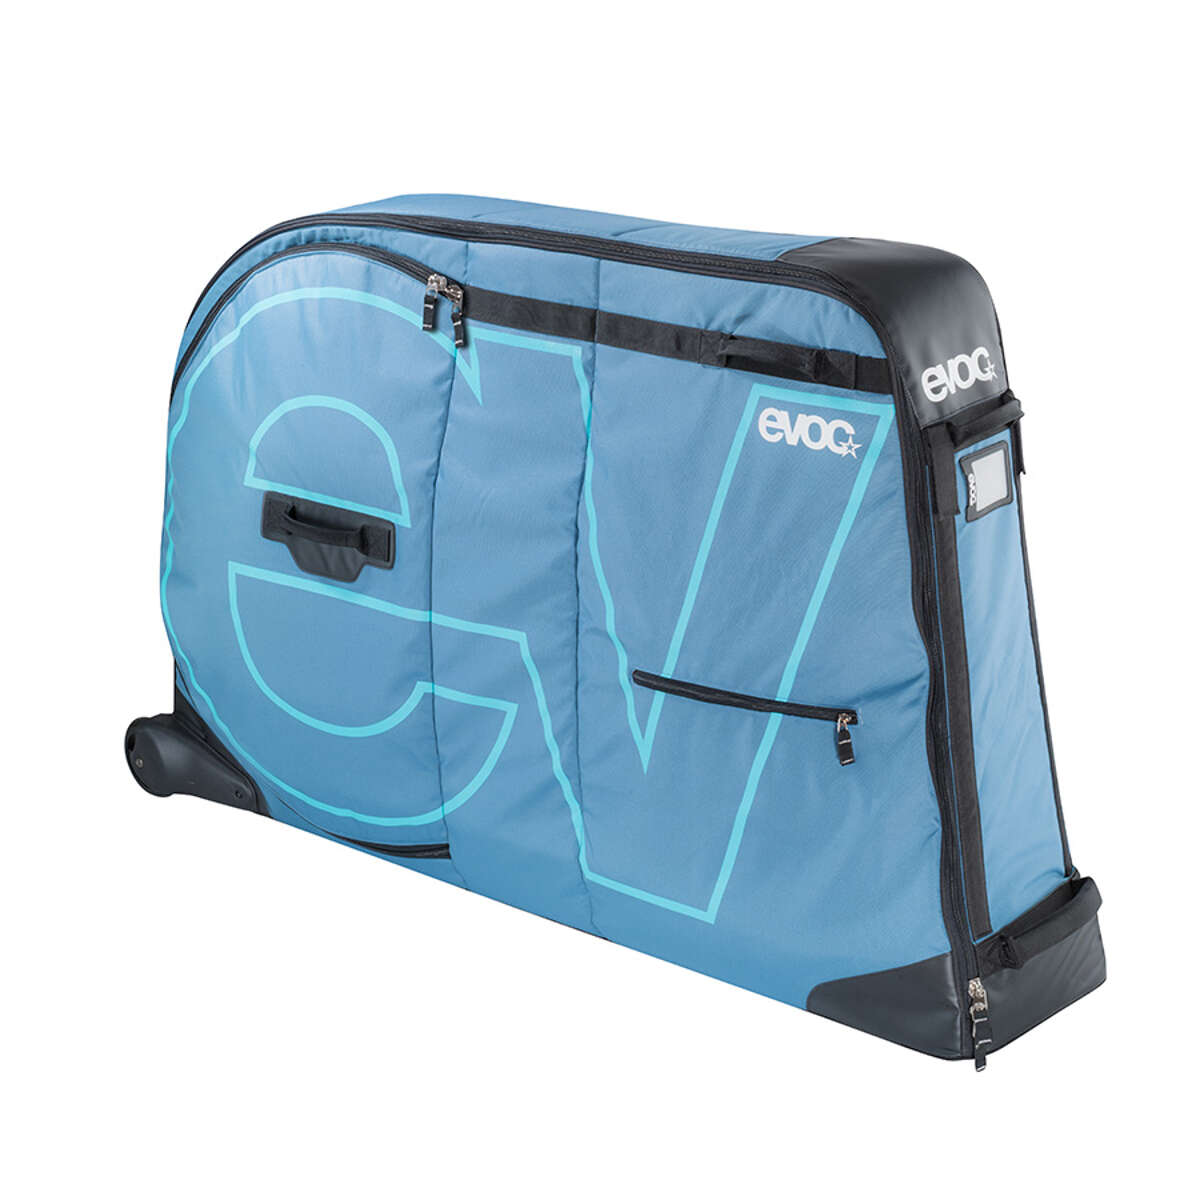 Evoc Fahrrad-Transporttasche  Copen Blue, 280 Liter